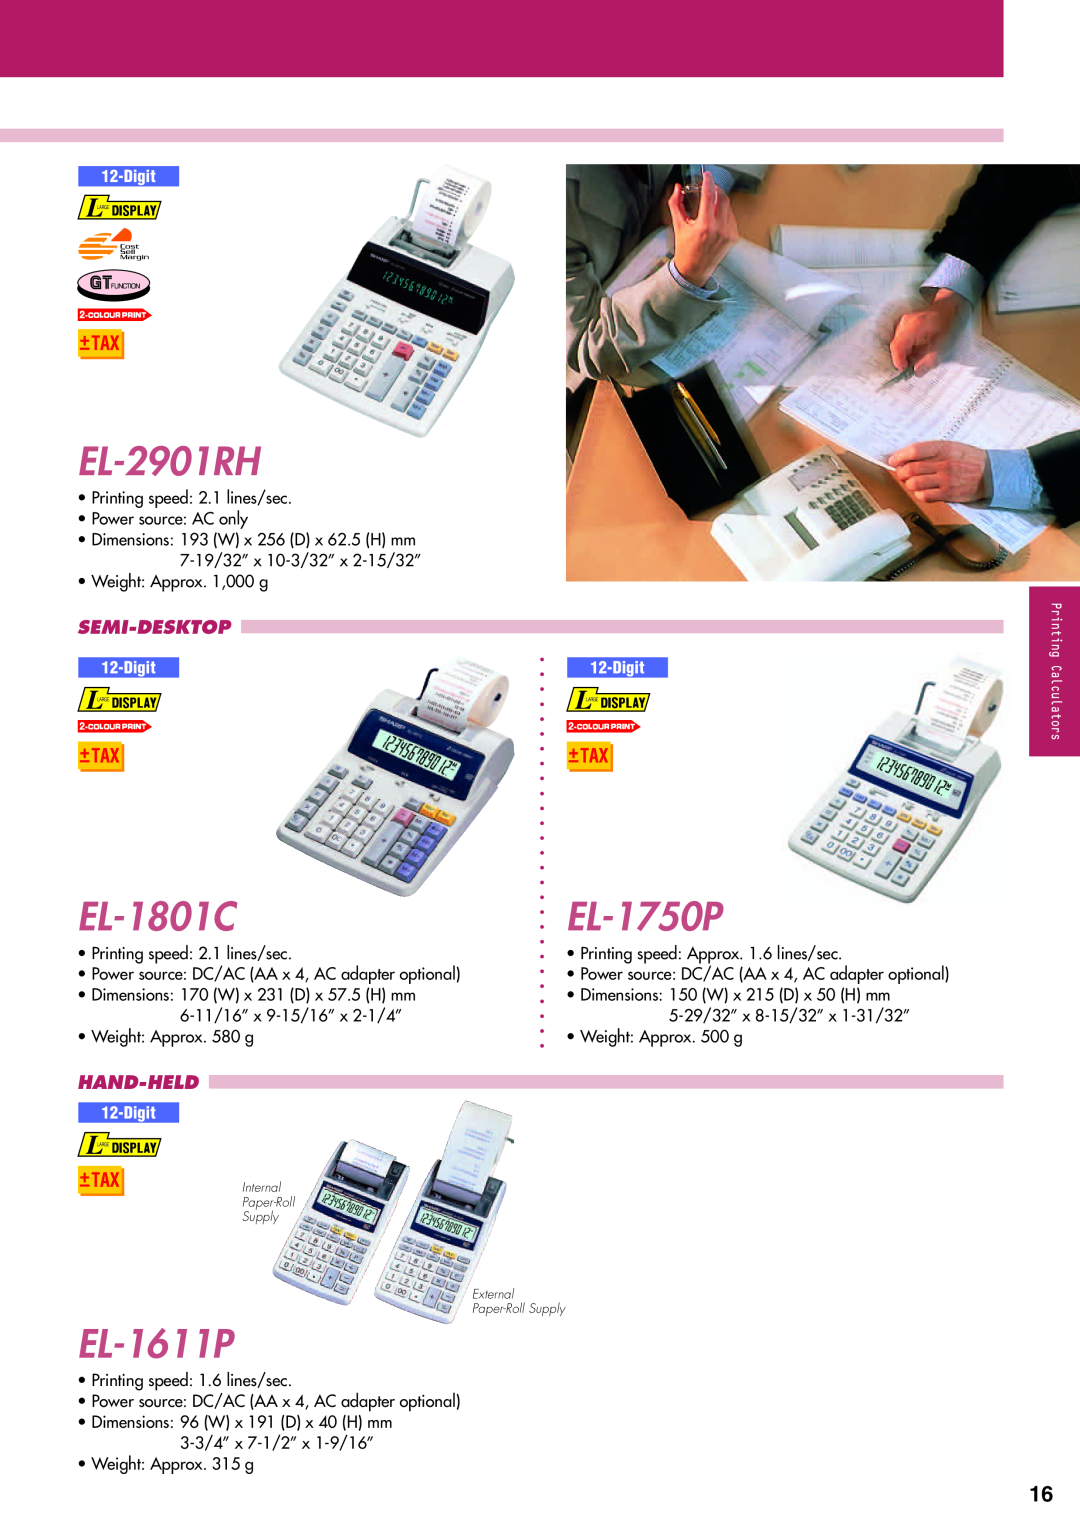 Sharp electronic calculator manual EL-2901RH, EL-1801C, EL-1750P, EL-1611P, Semi-Desktop, Hand-Held, Digit 